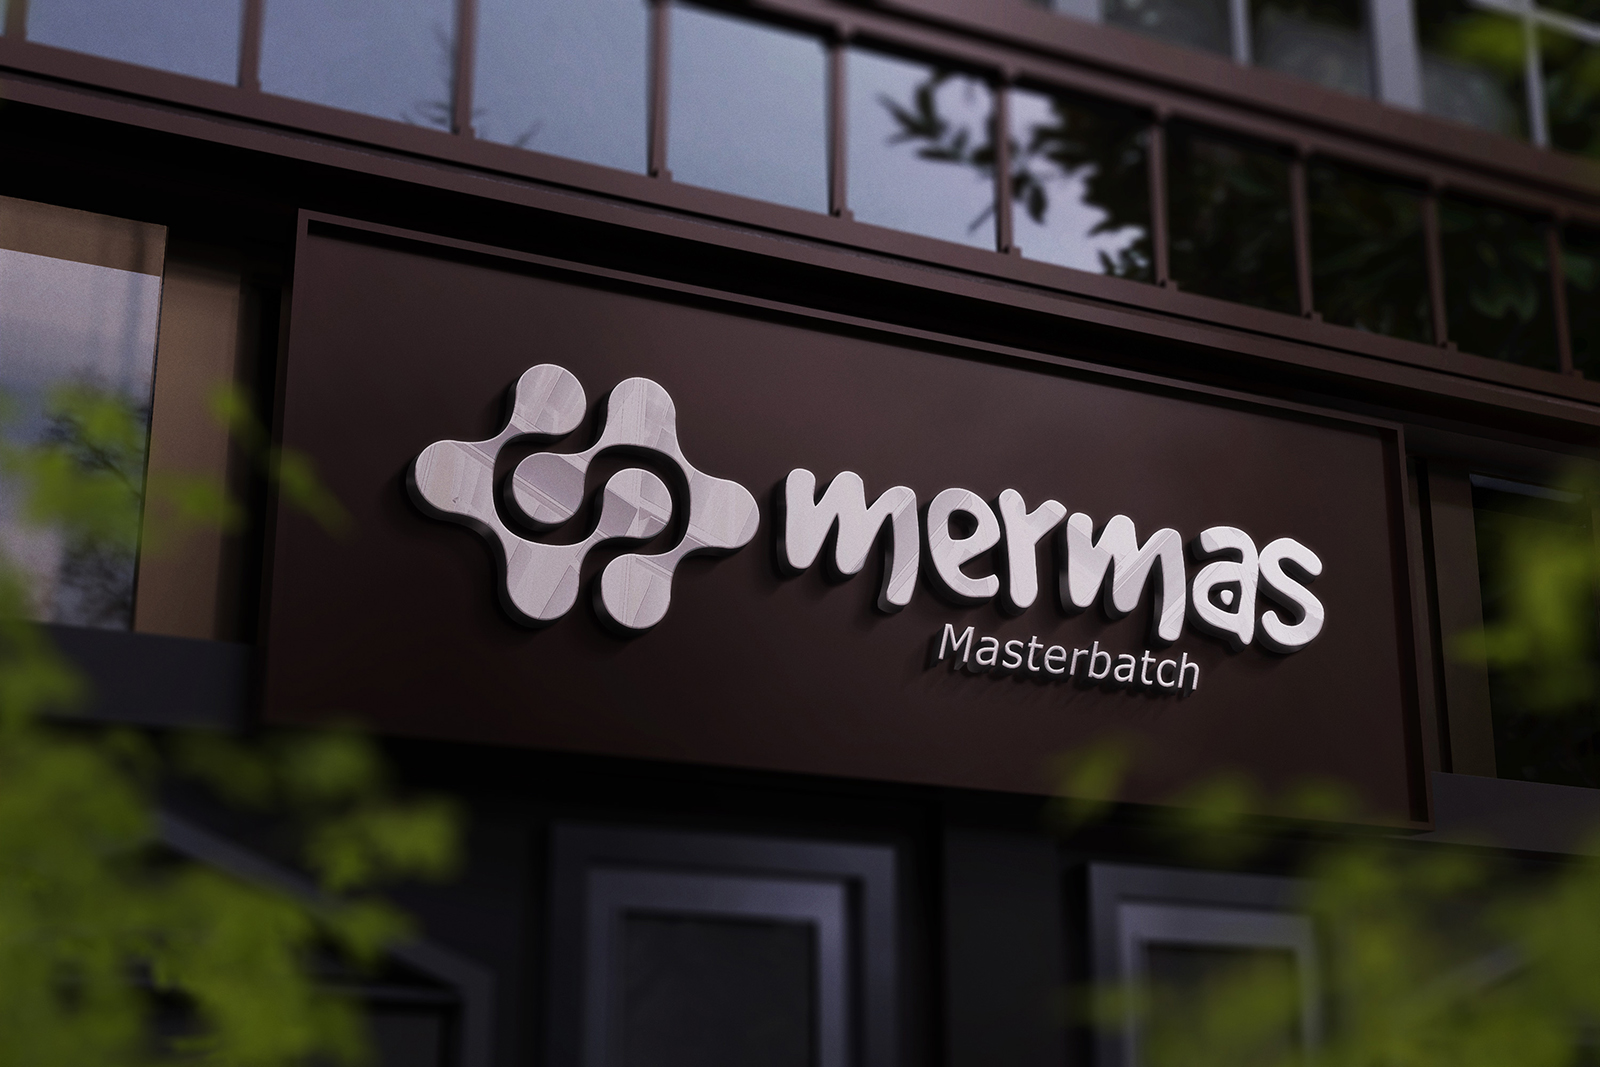 Mermas Masterbatch Logo Tasarımı